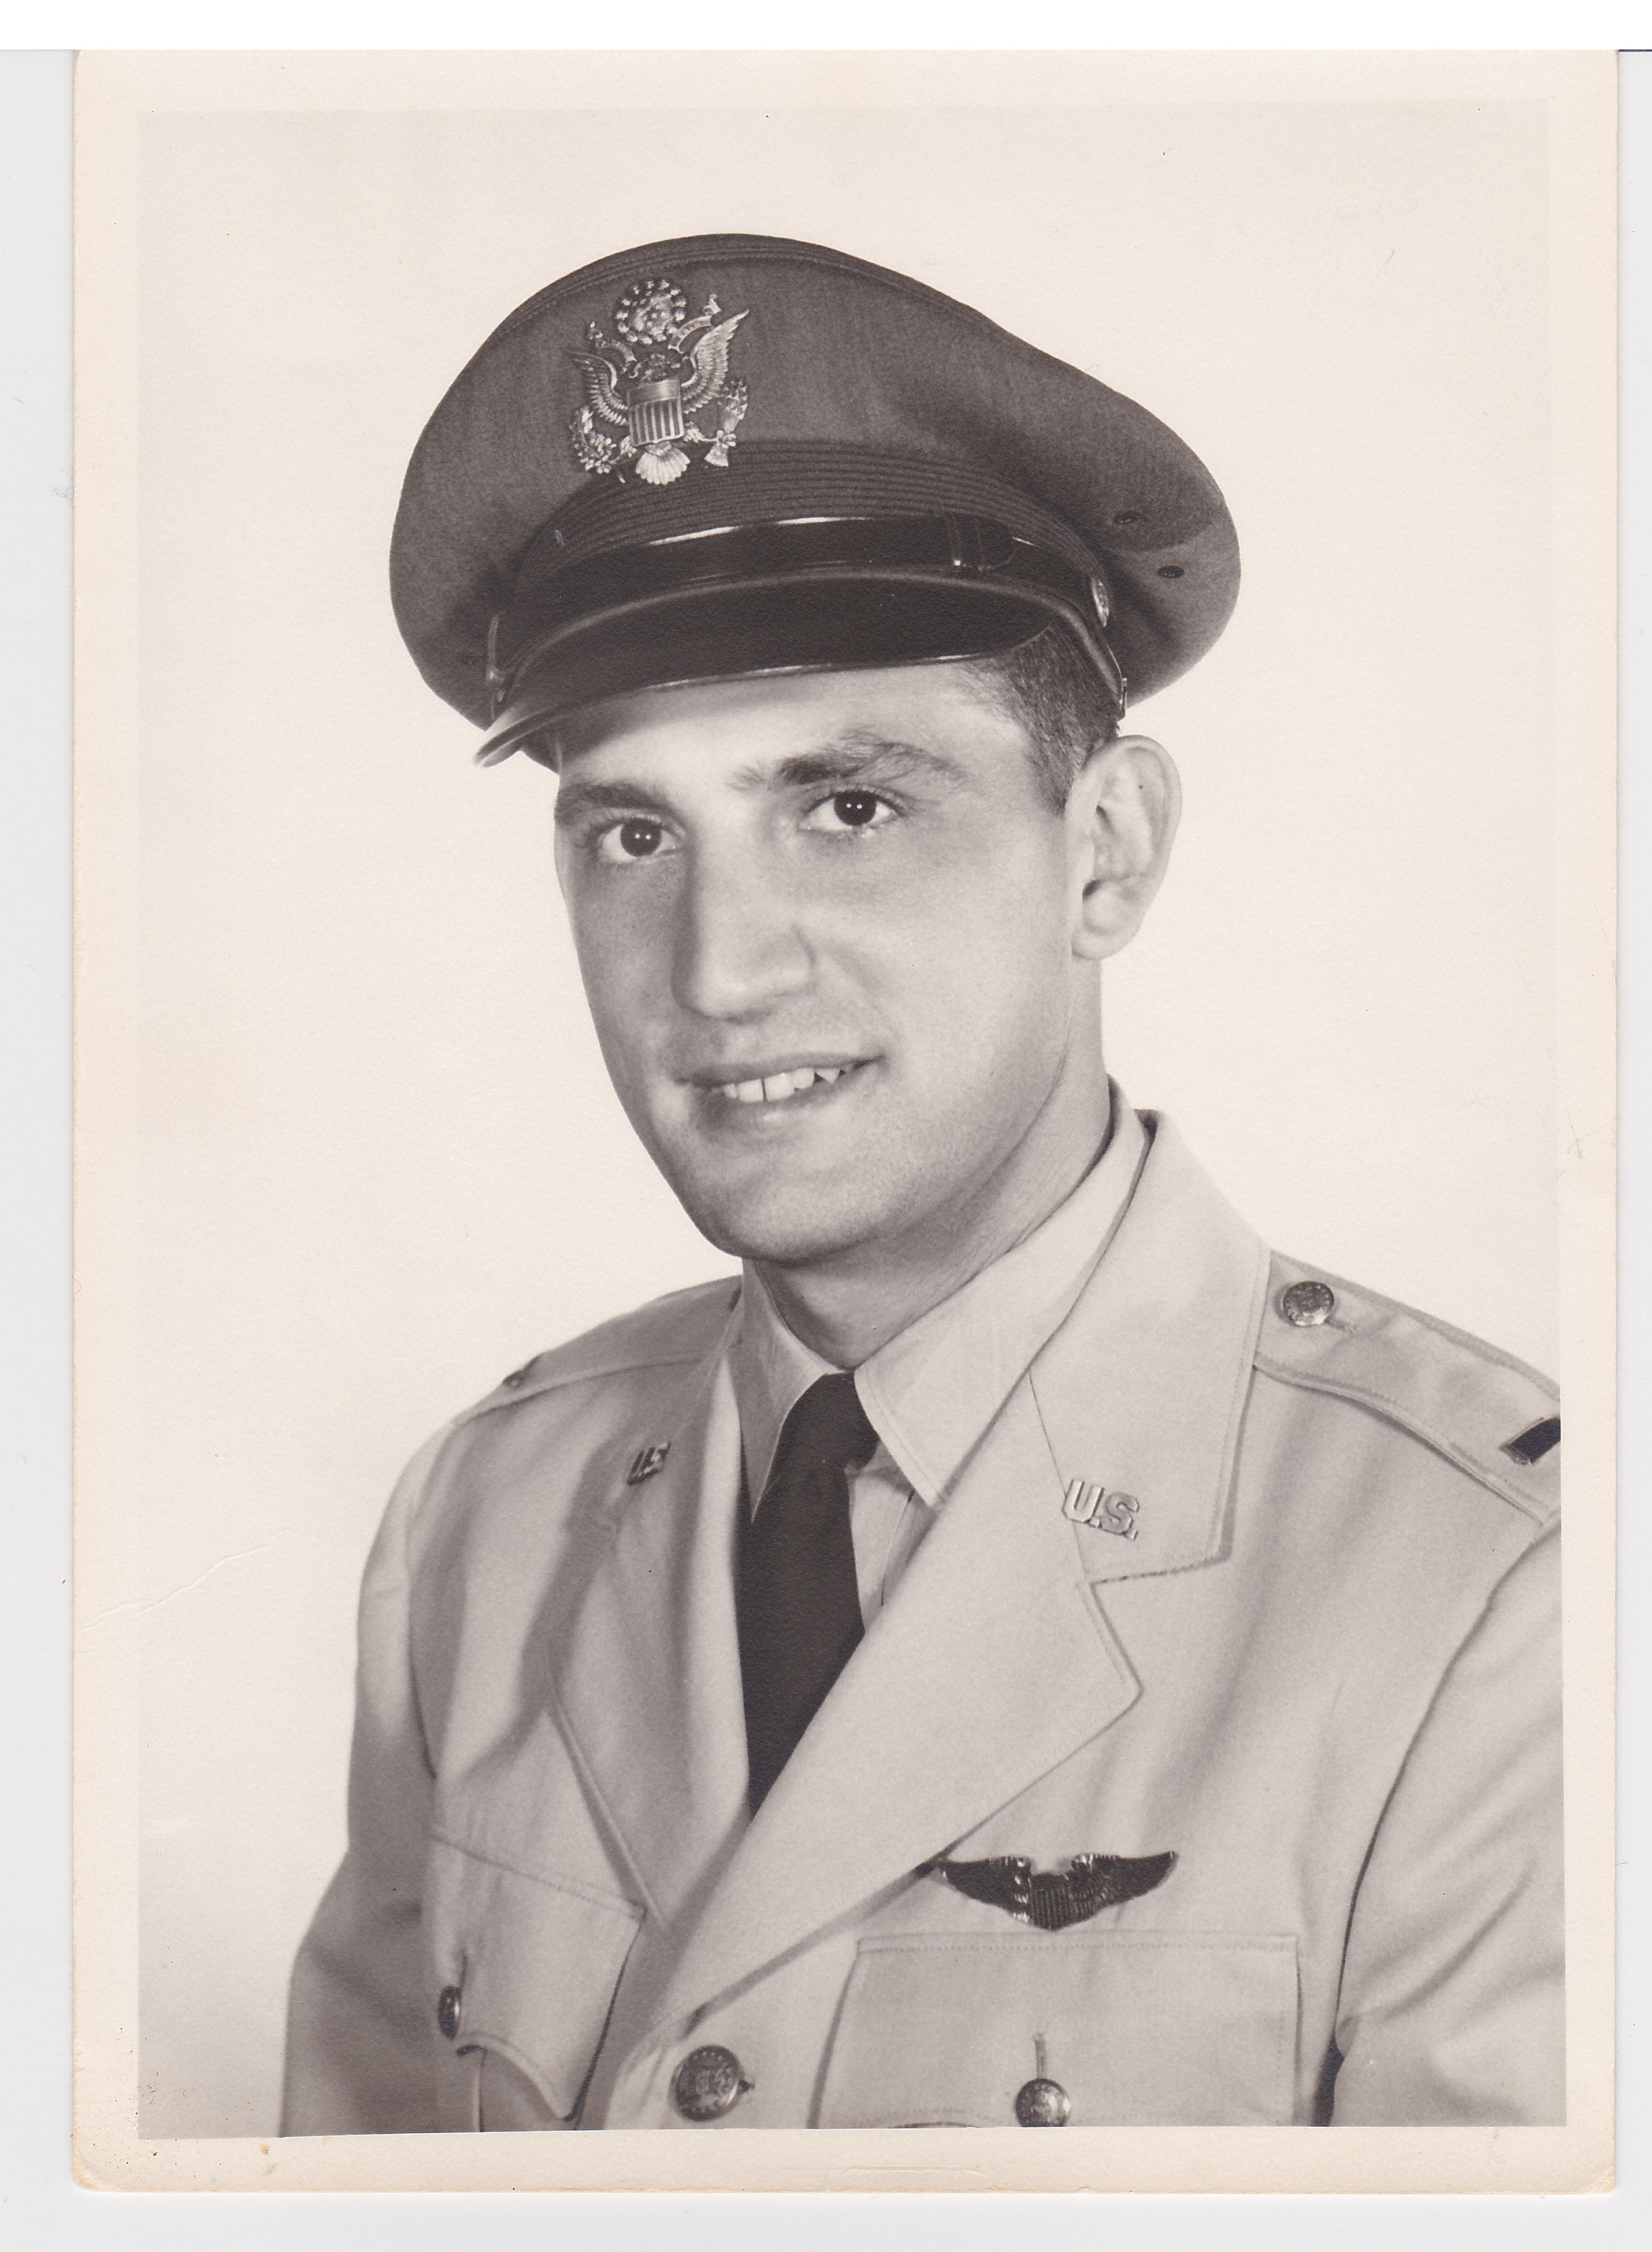 Capt Donald R. Perricone USAF